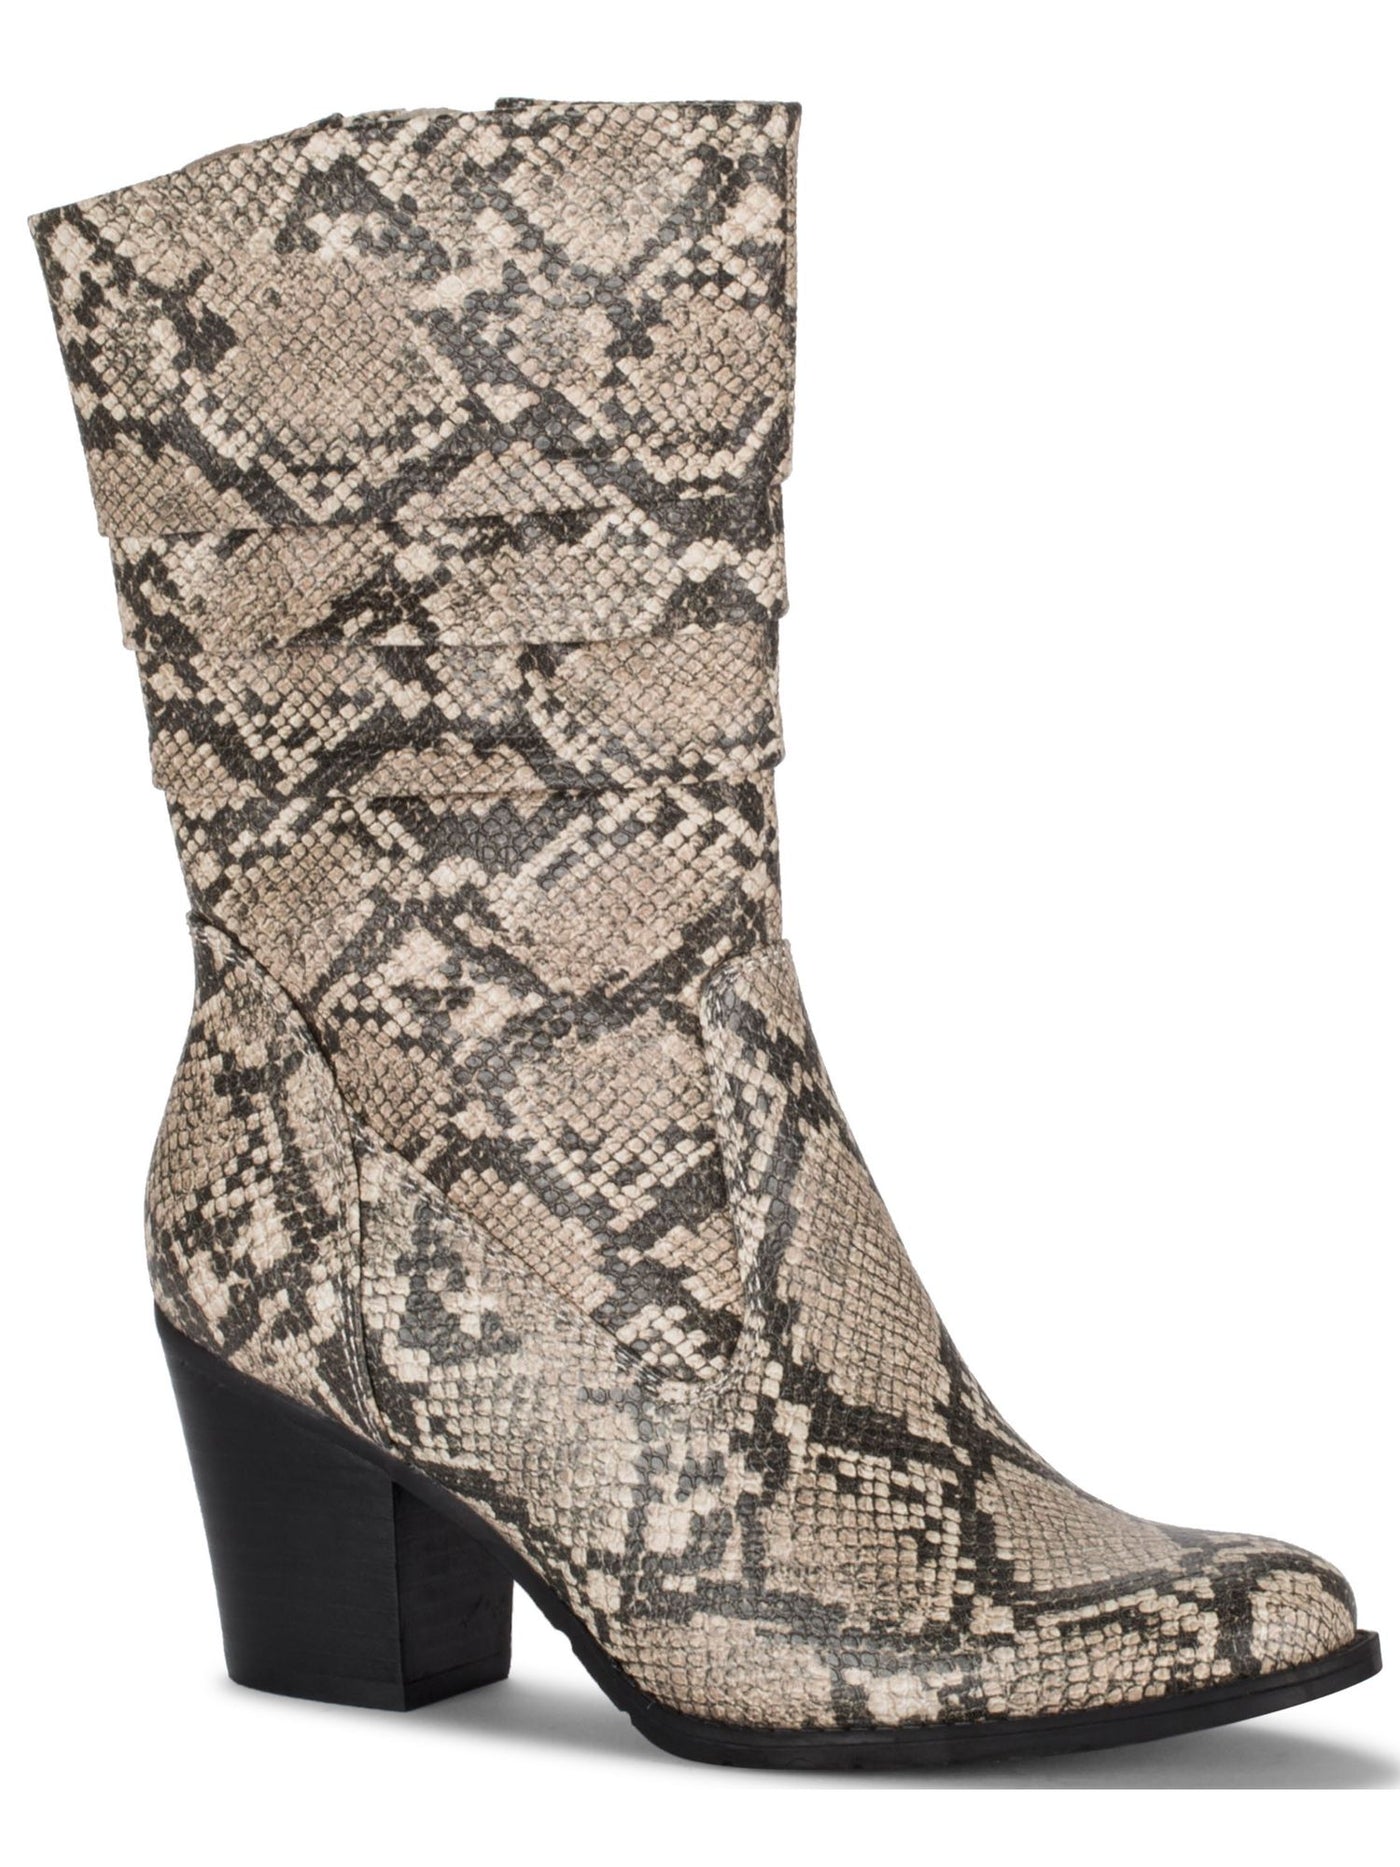 BARETRAPS Womens Beige Animal Print Round Toe Stacked Heel Zip-Up Heeled Boots 9.5